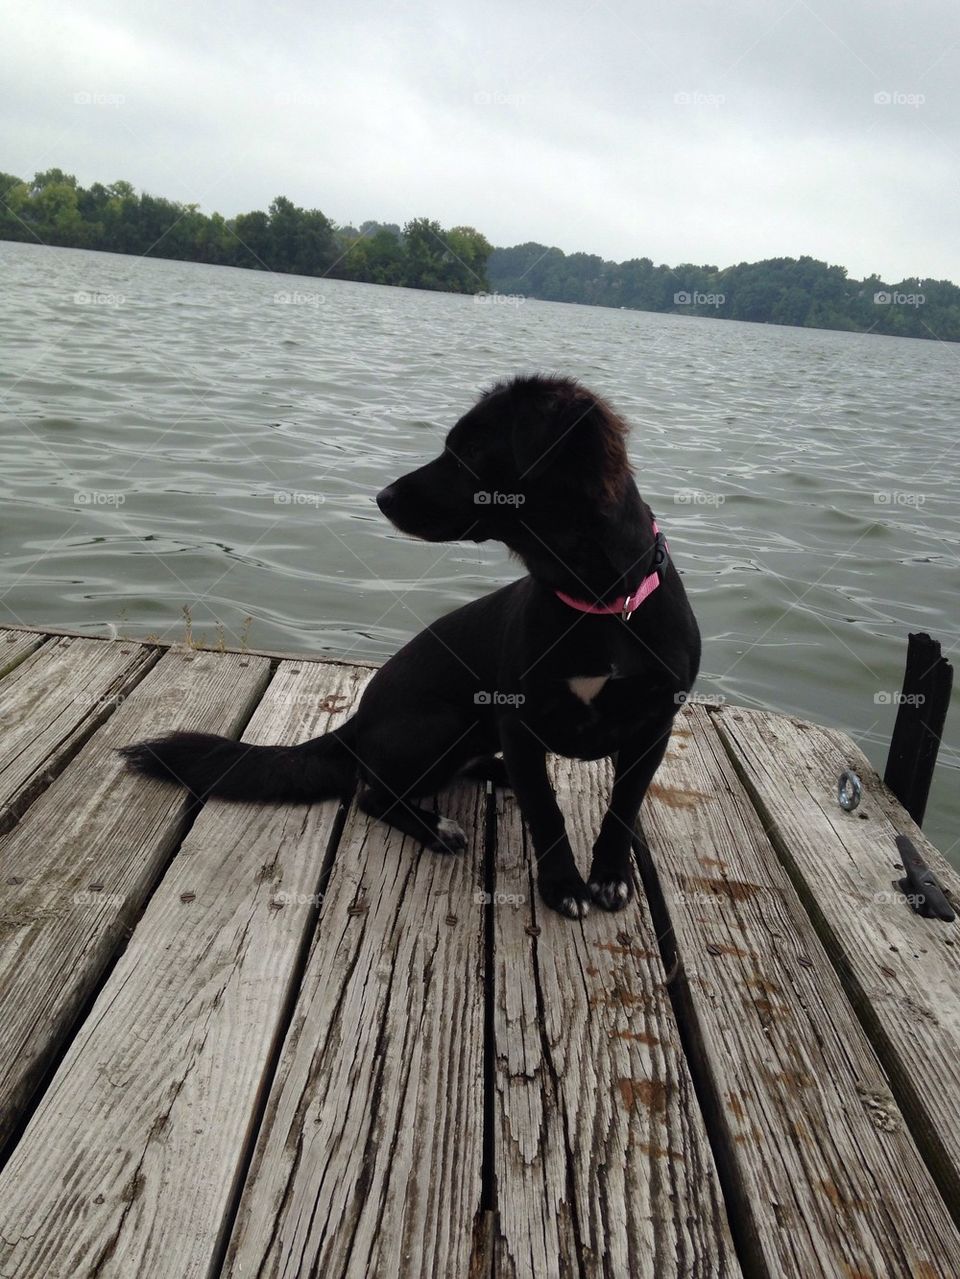 Roxxy on the dock